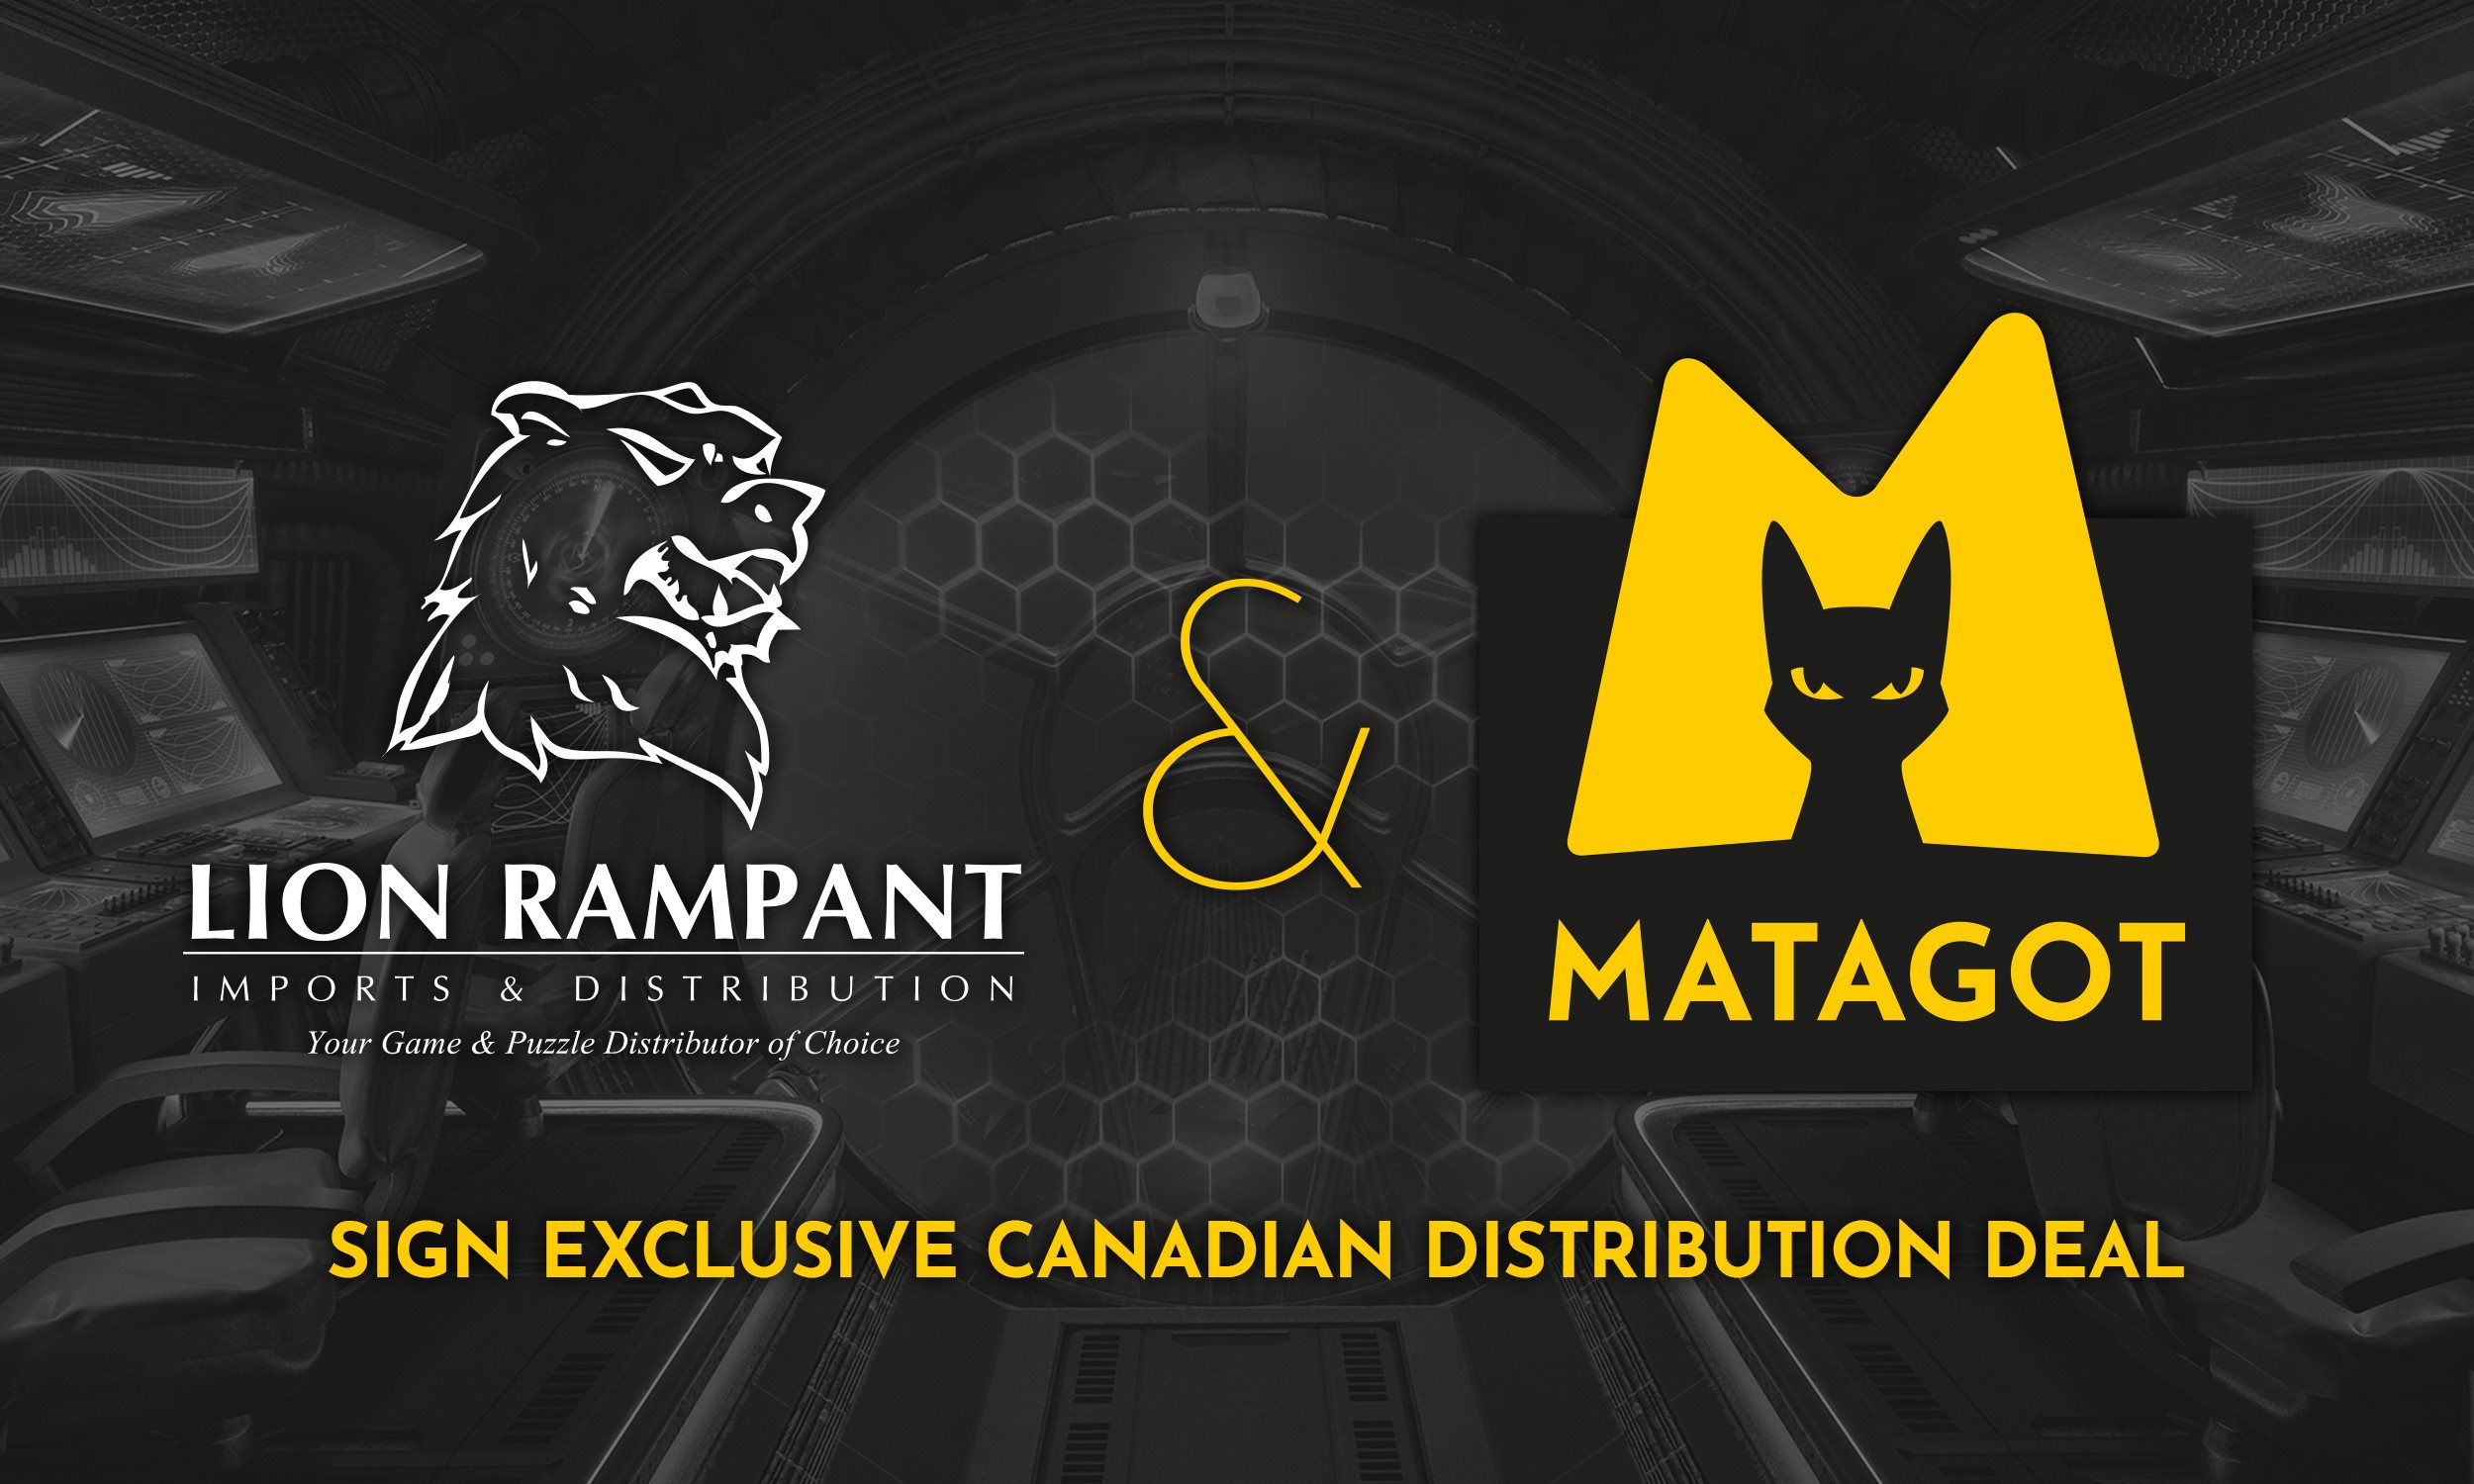 LRI & Matagot Sign Exclusive Canadian Distribution Deal